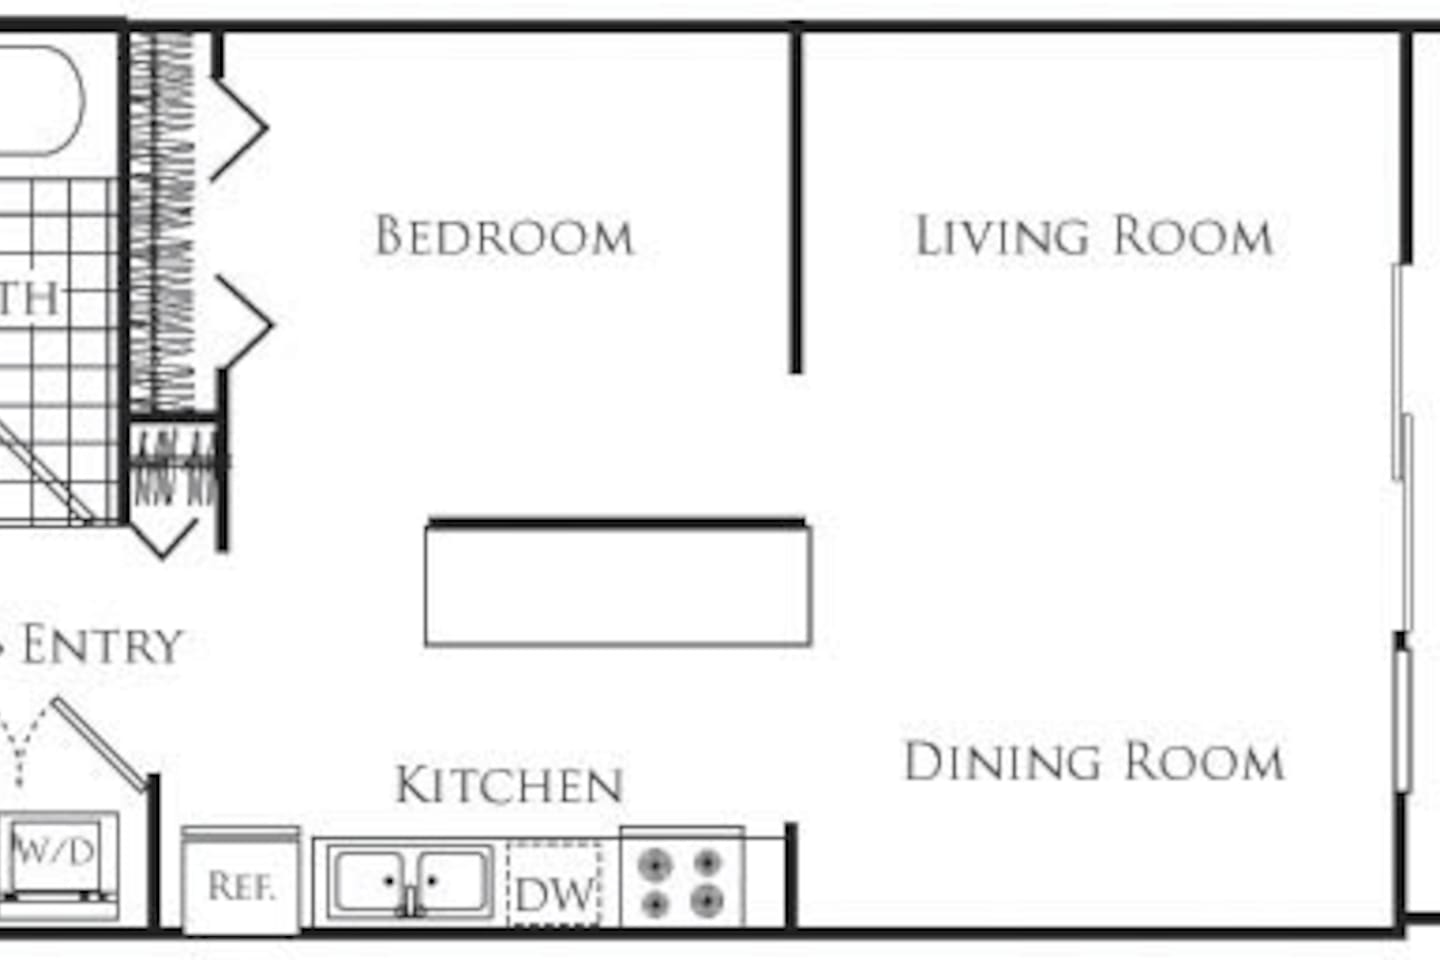 Floorplan diagram for B01, showing Studio